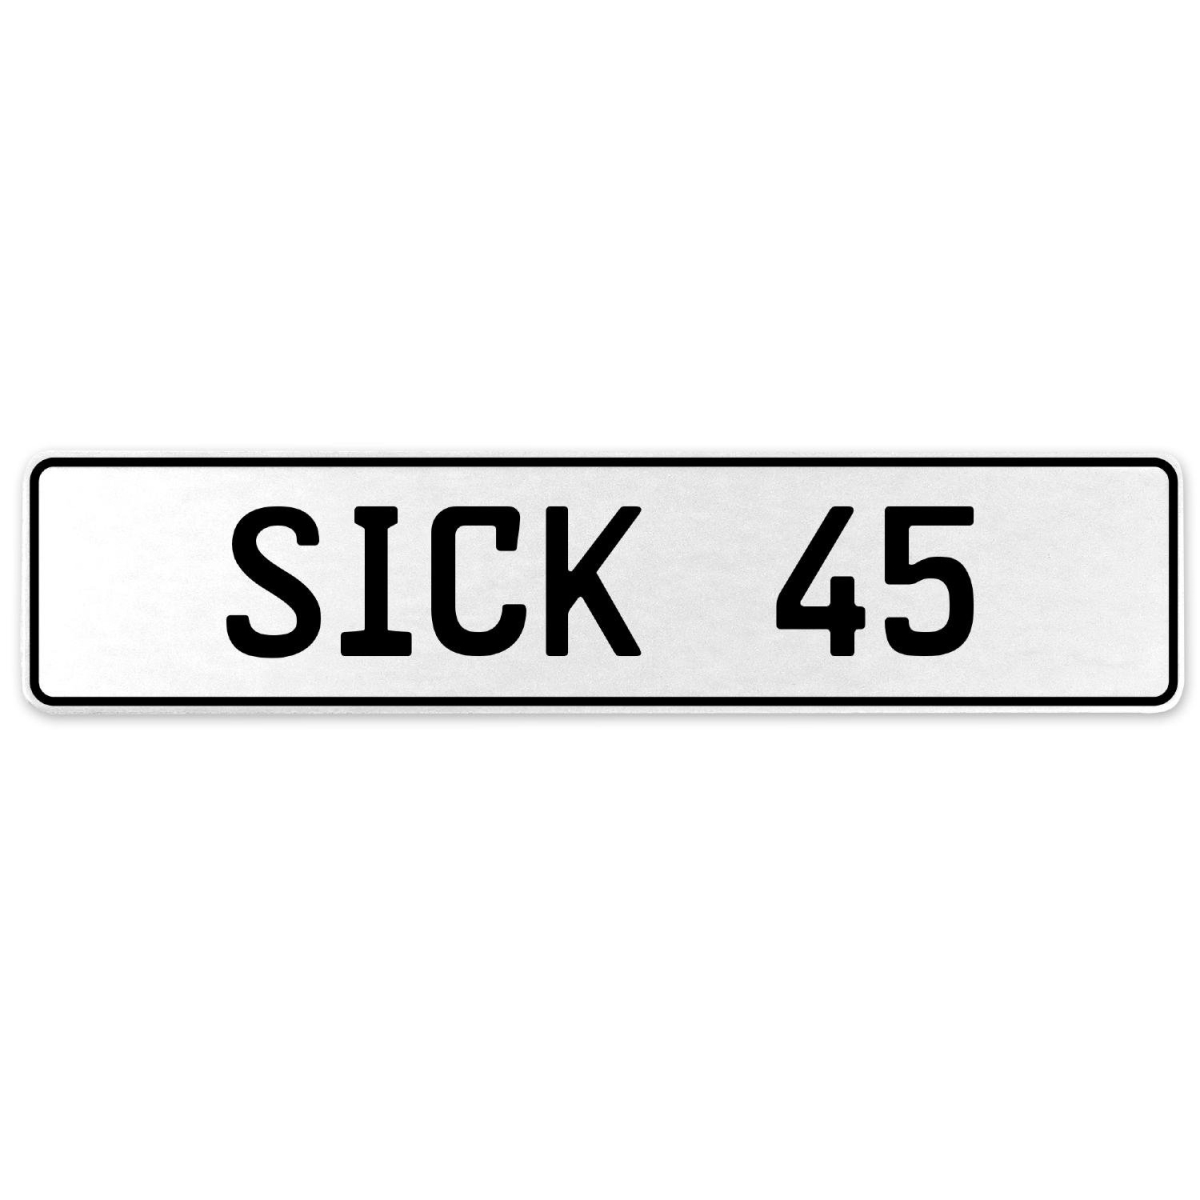 554345 Sick 45 - White Aluminum Street Sign Mancave Euro Plate Name Door Sign Wall